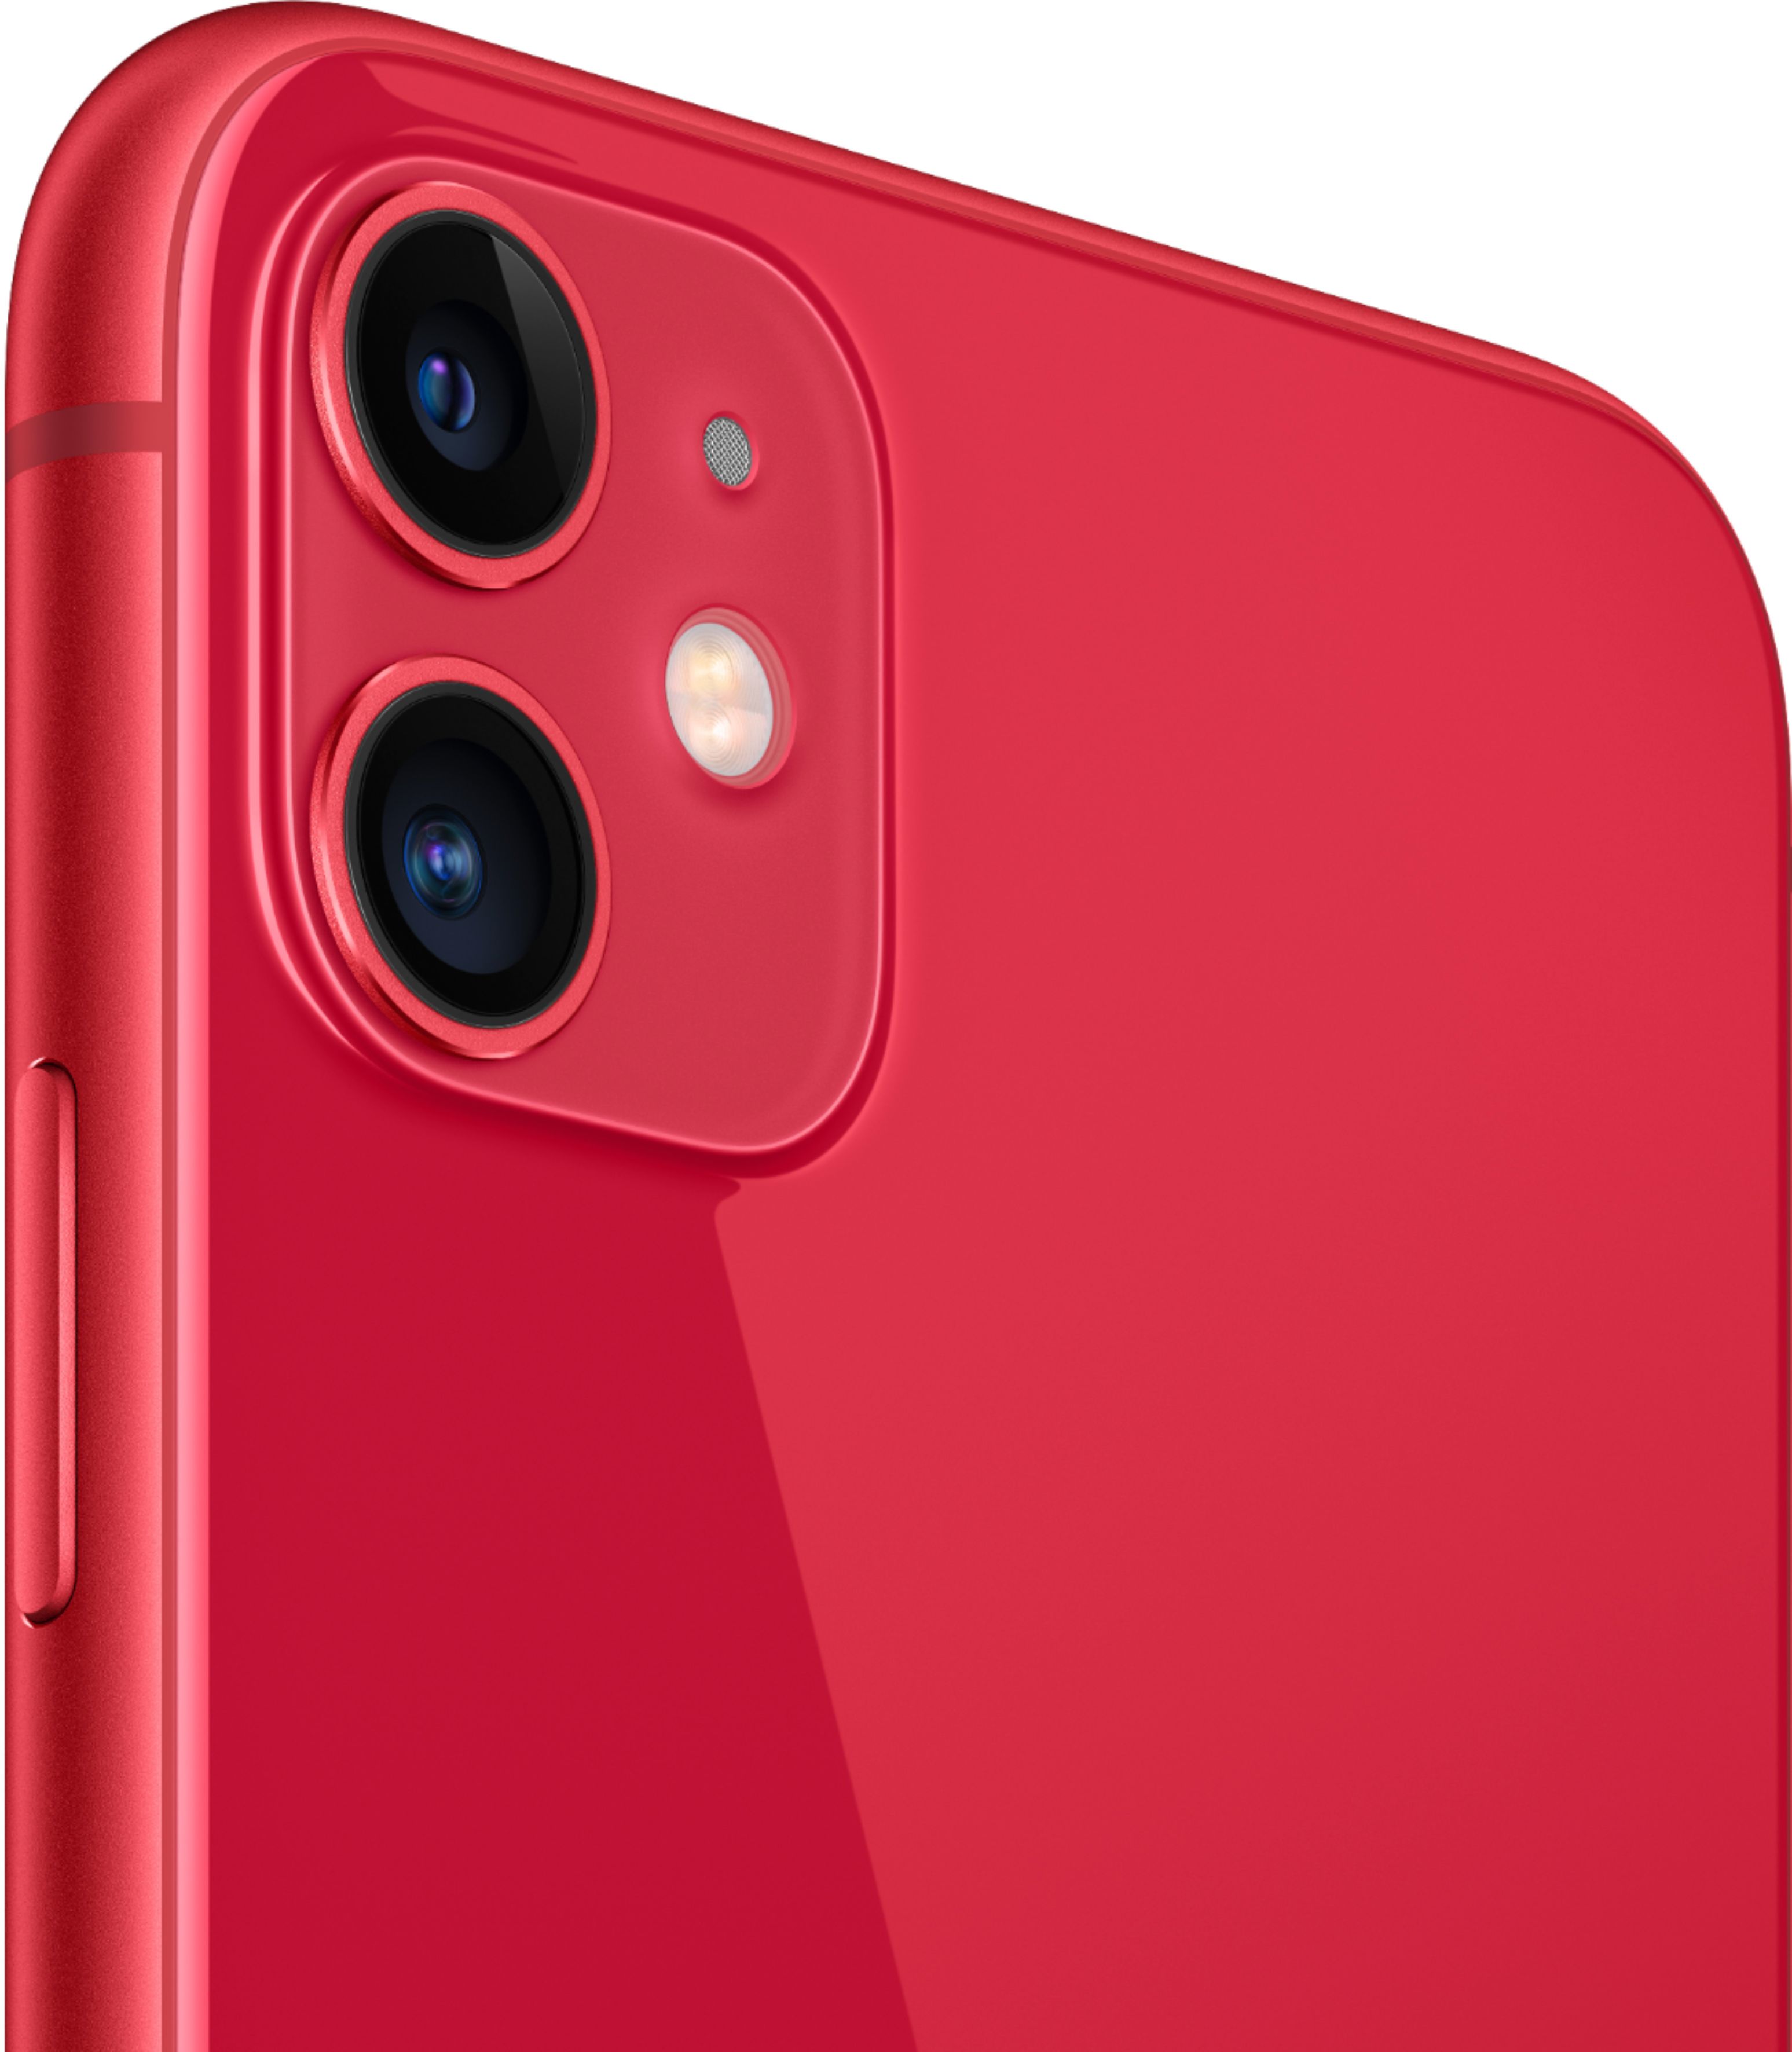 Apple iPhone 13 - 128 GB - (PRODUCT)RED - Verizon